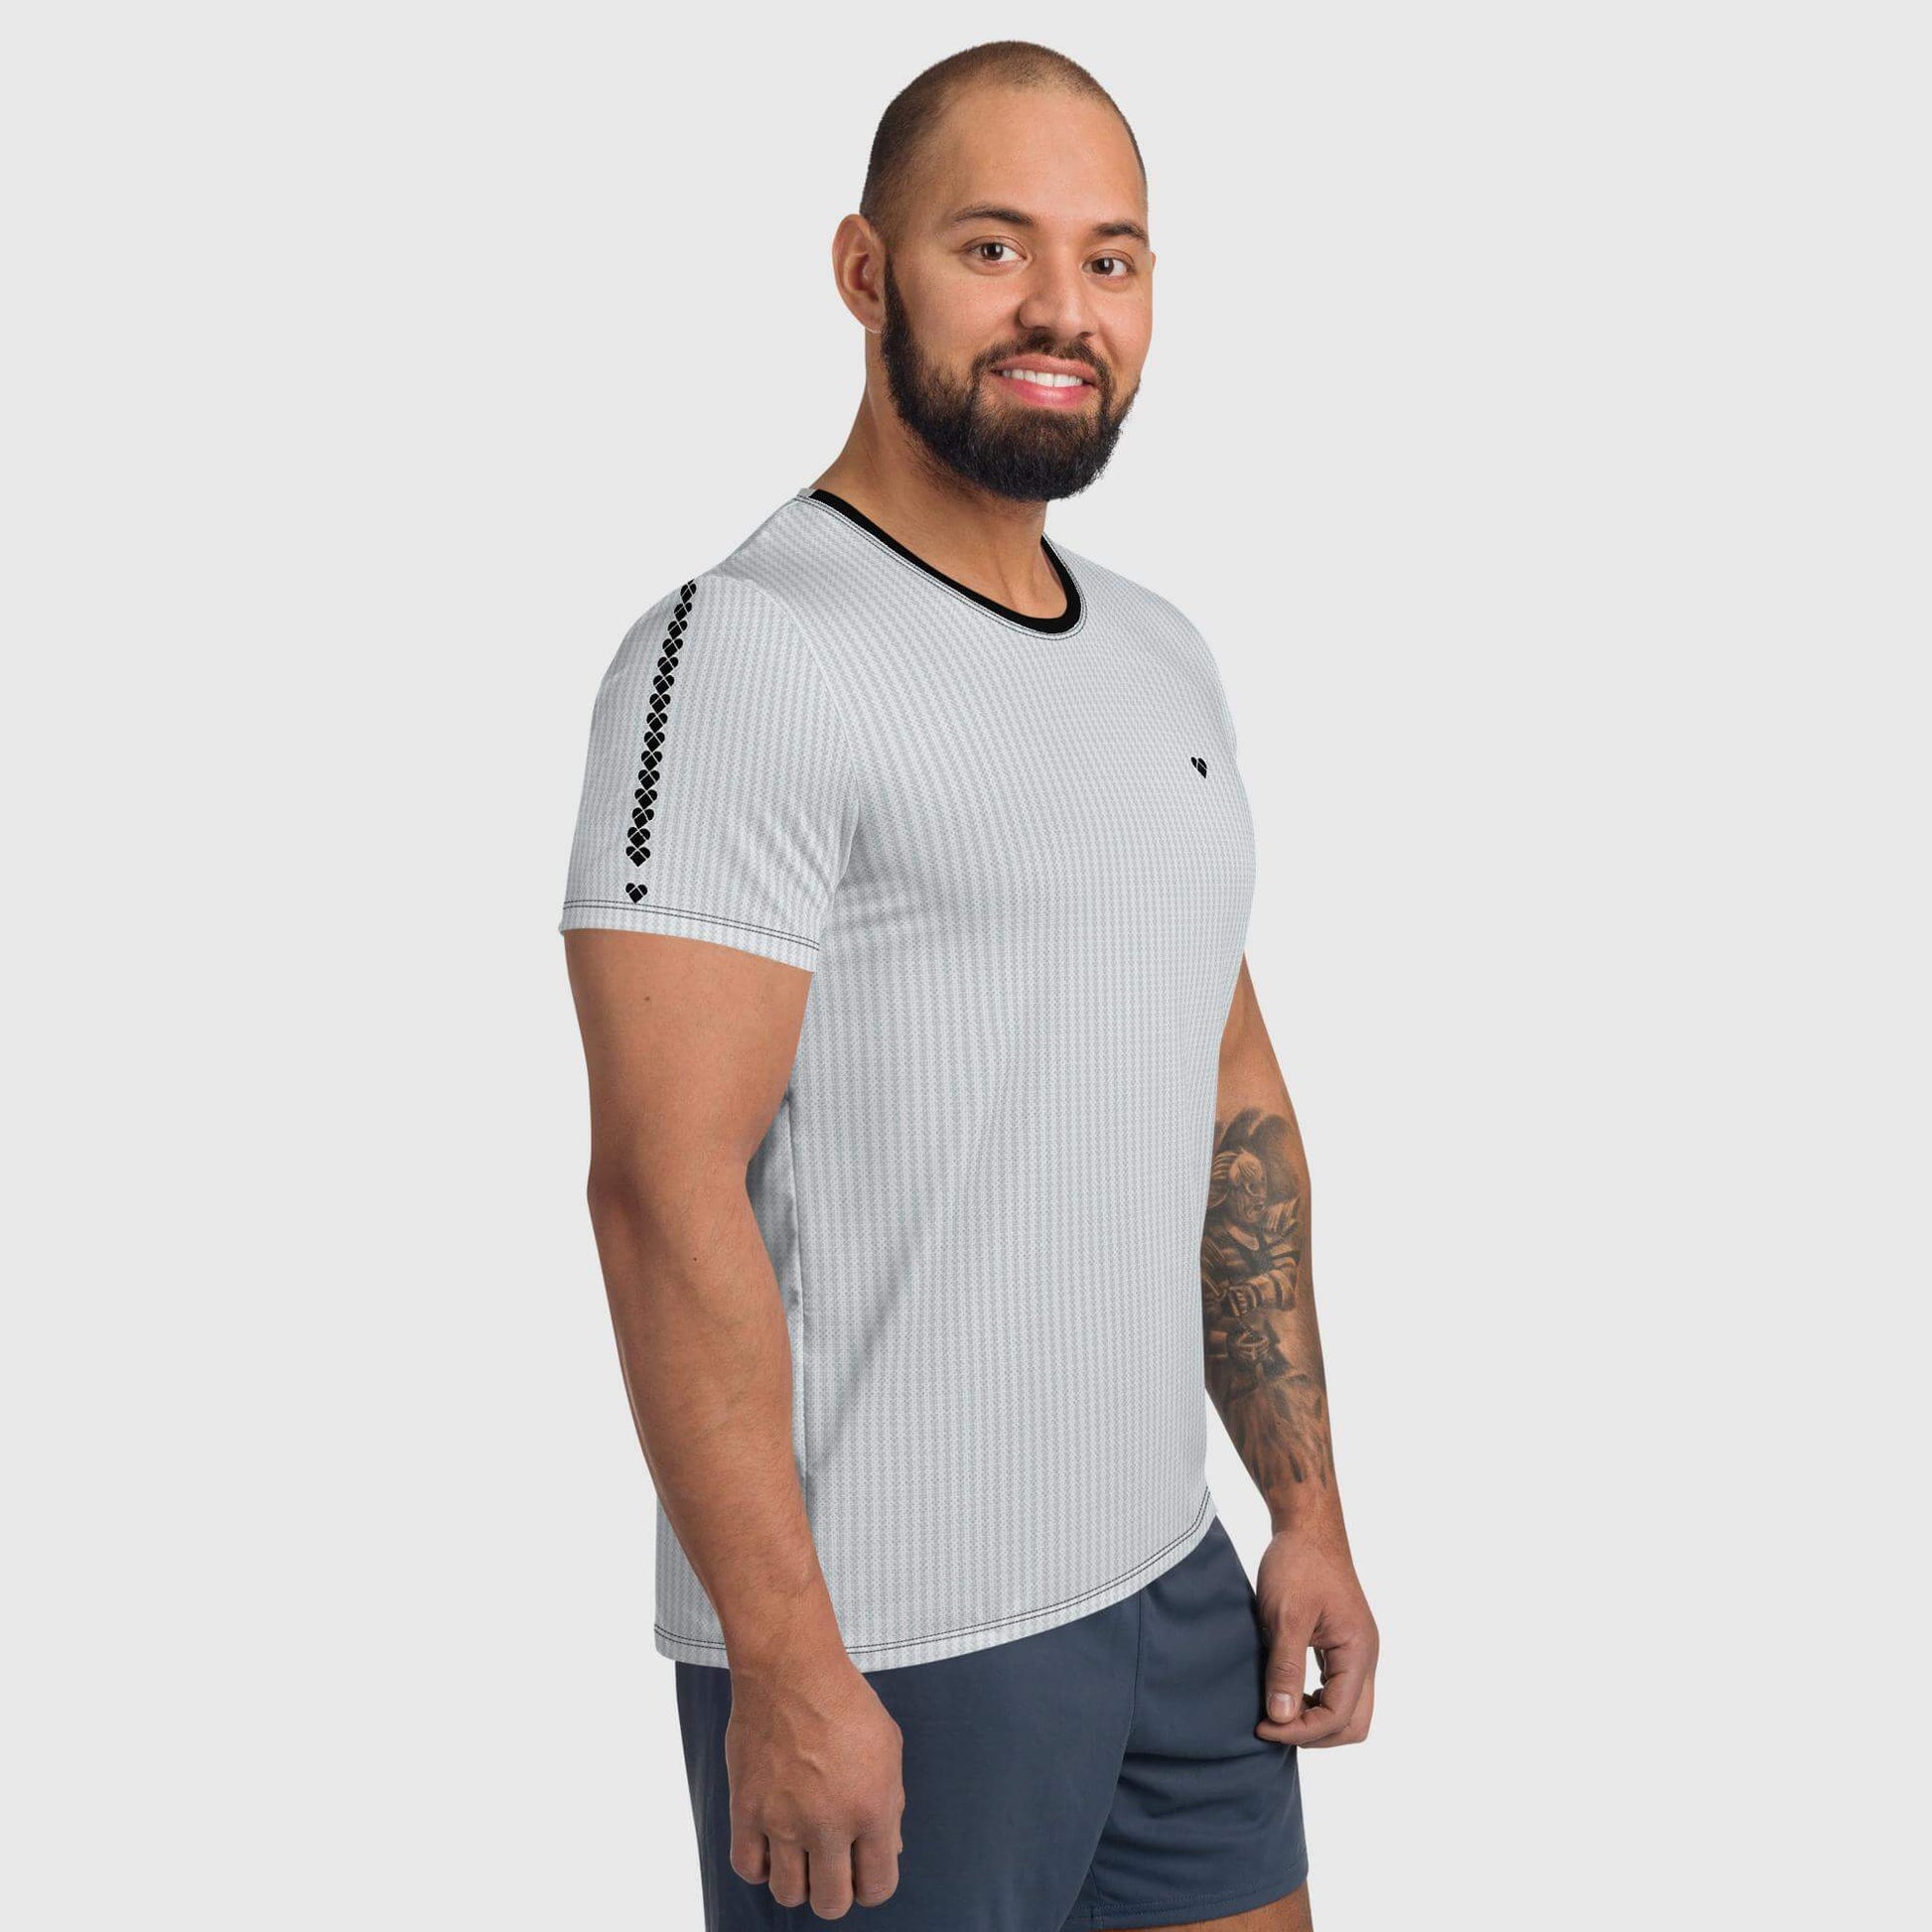 Distinctive black heart logo stripe on sleeves, light gray lovo-gram pattern with small geometric hearts sport shirt for men from CRiZ AMOR, sleeve view